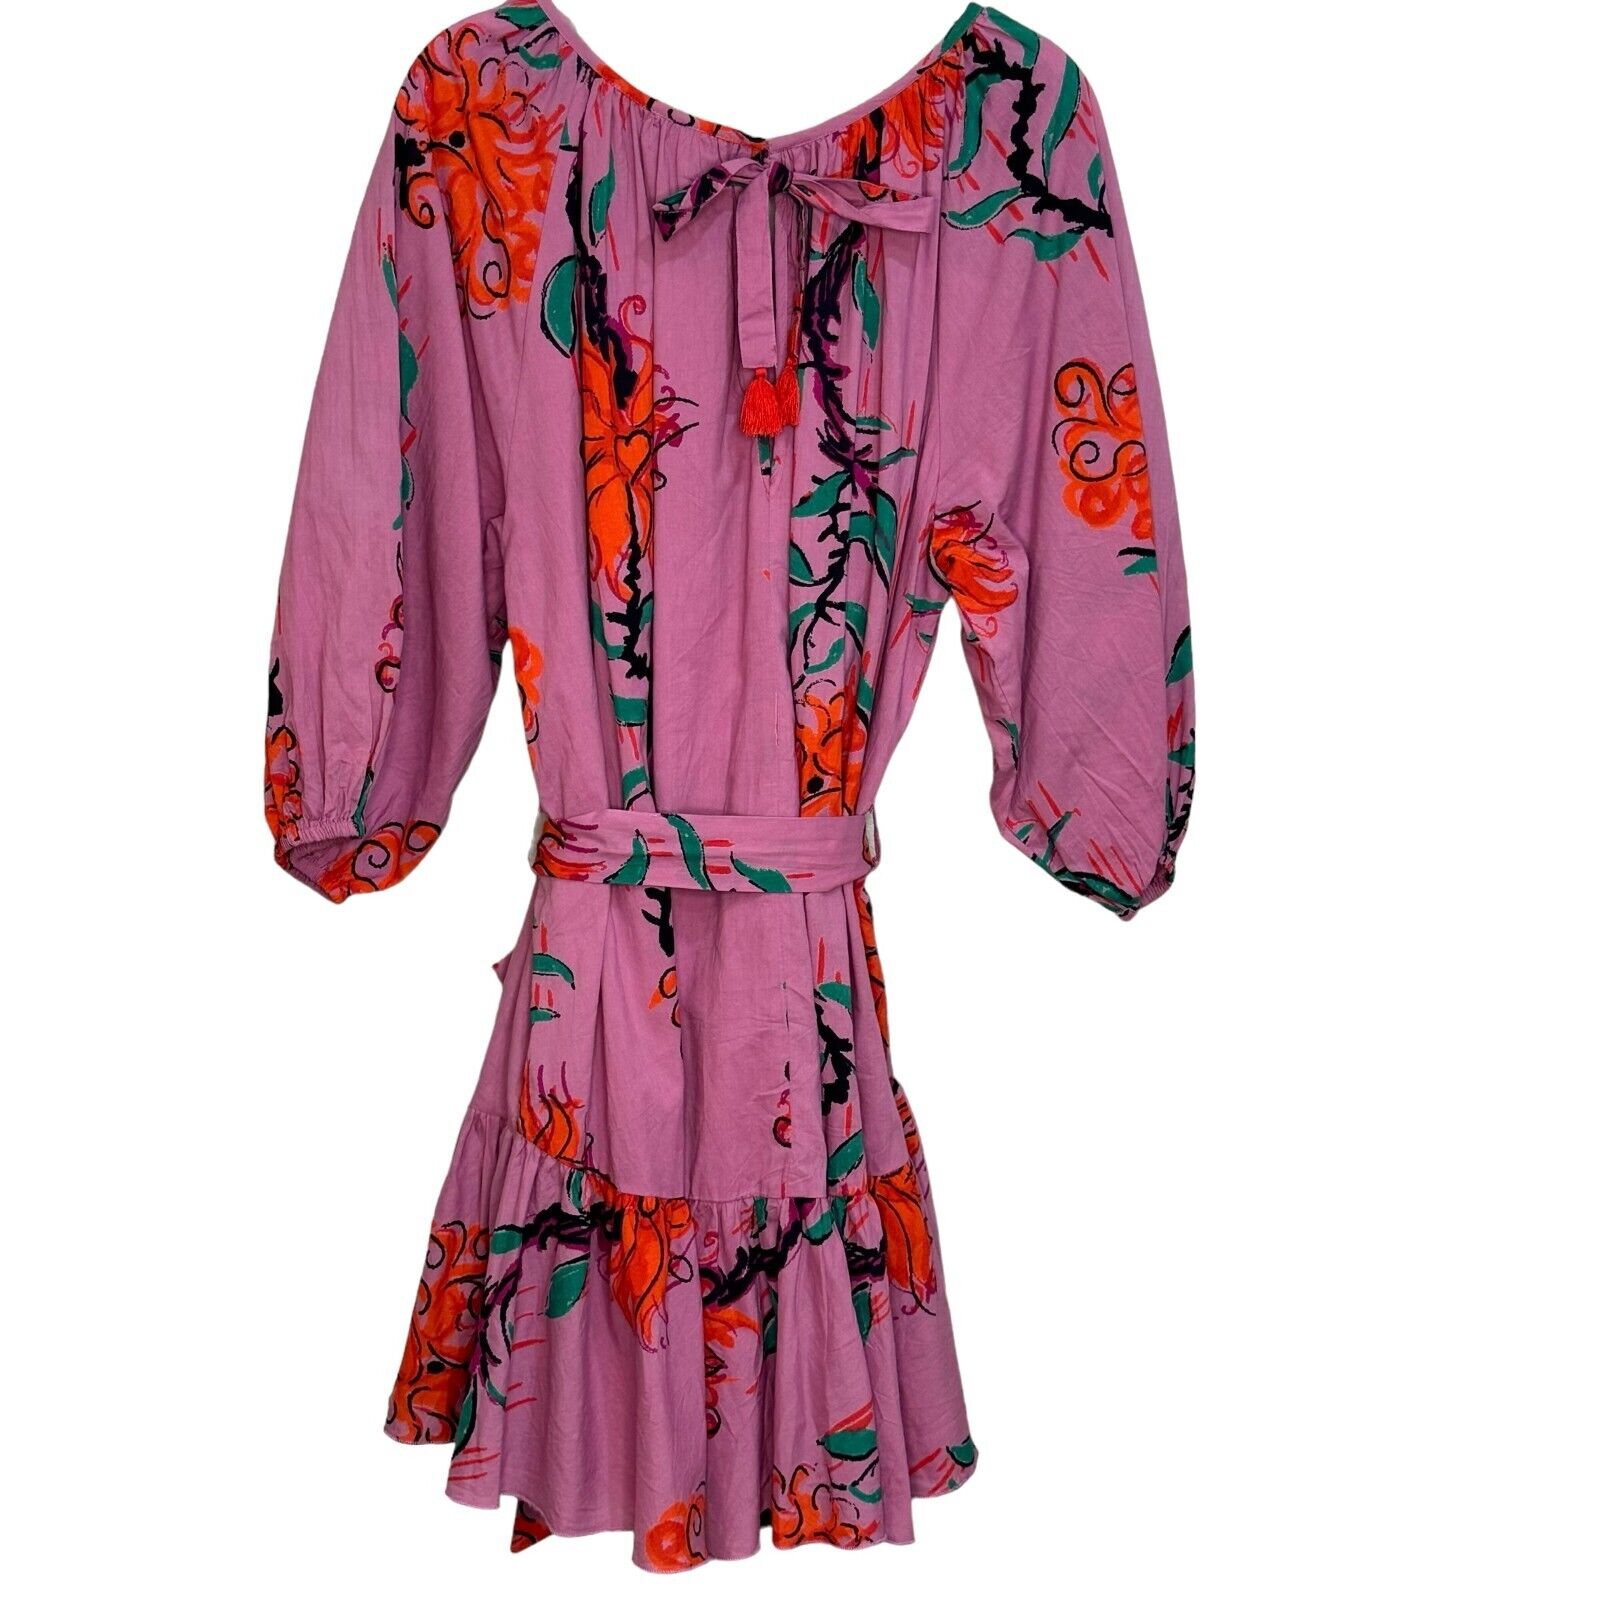 Ro's Garden Barcelona Pink Vera Cover Up Mini Dress Size Medium NEW $165